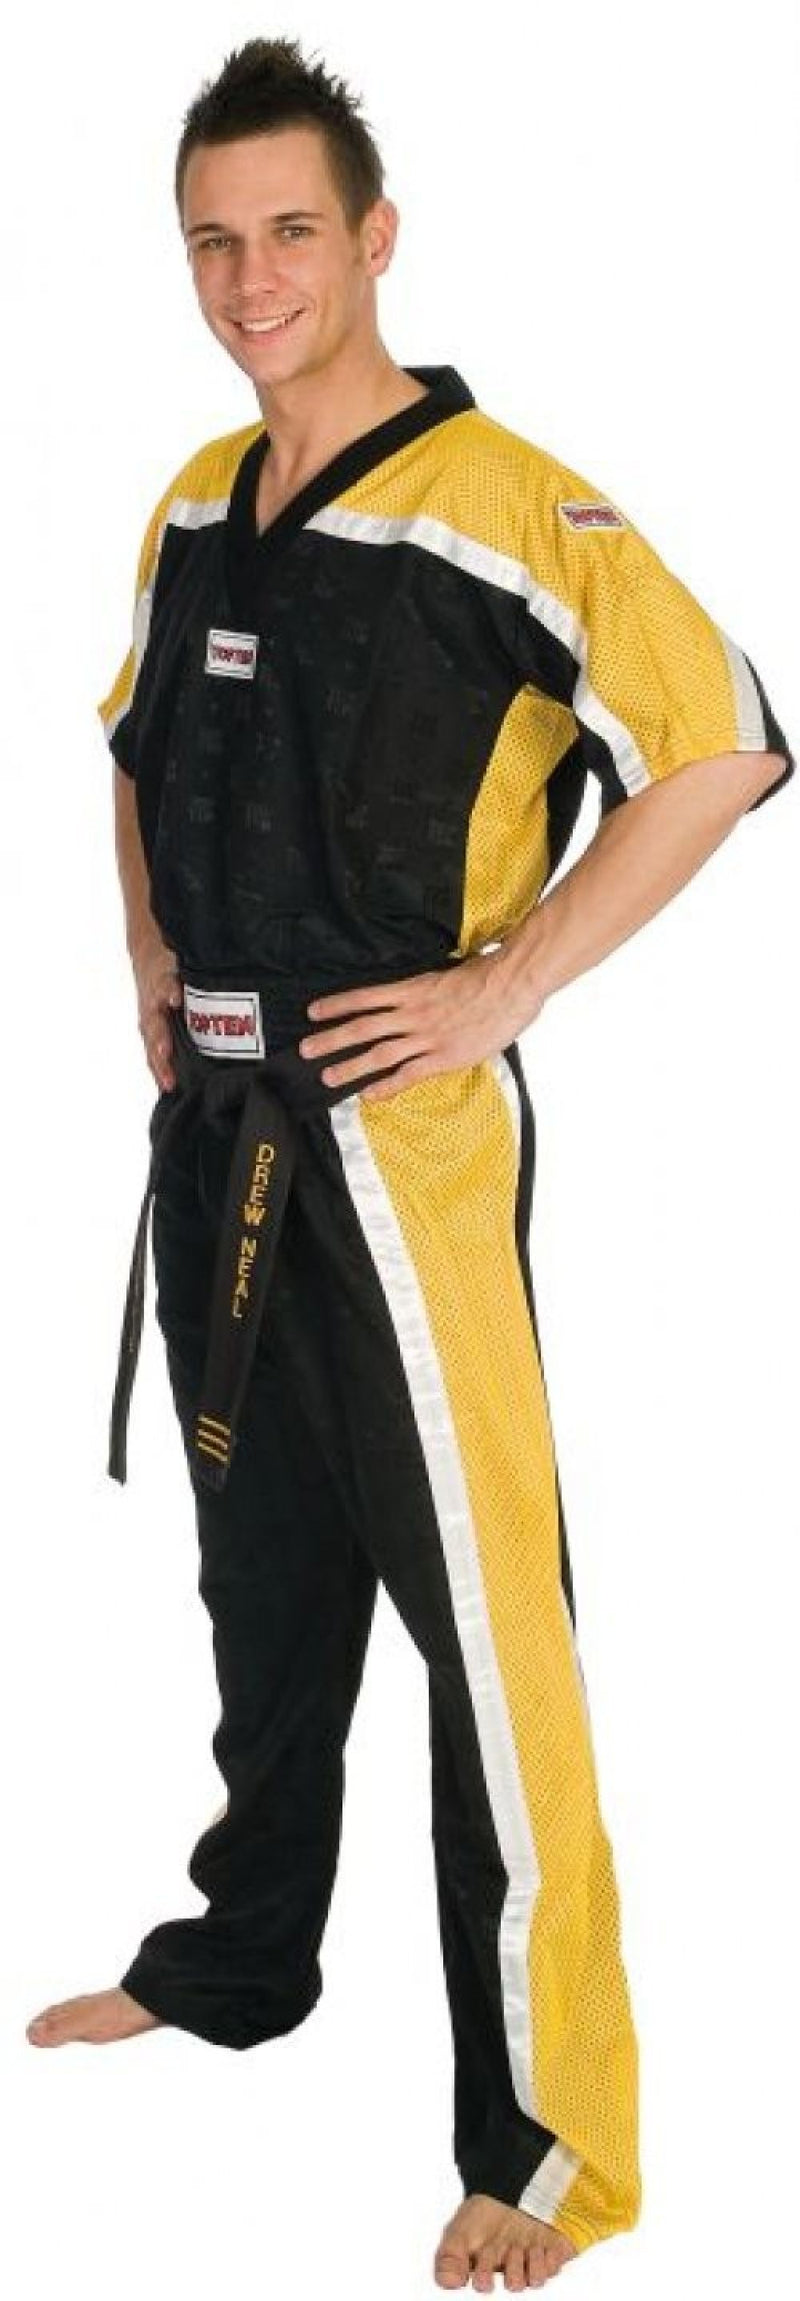 Top Ten Mesh uniform 1605 model - black//yellow, 1605 G